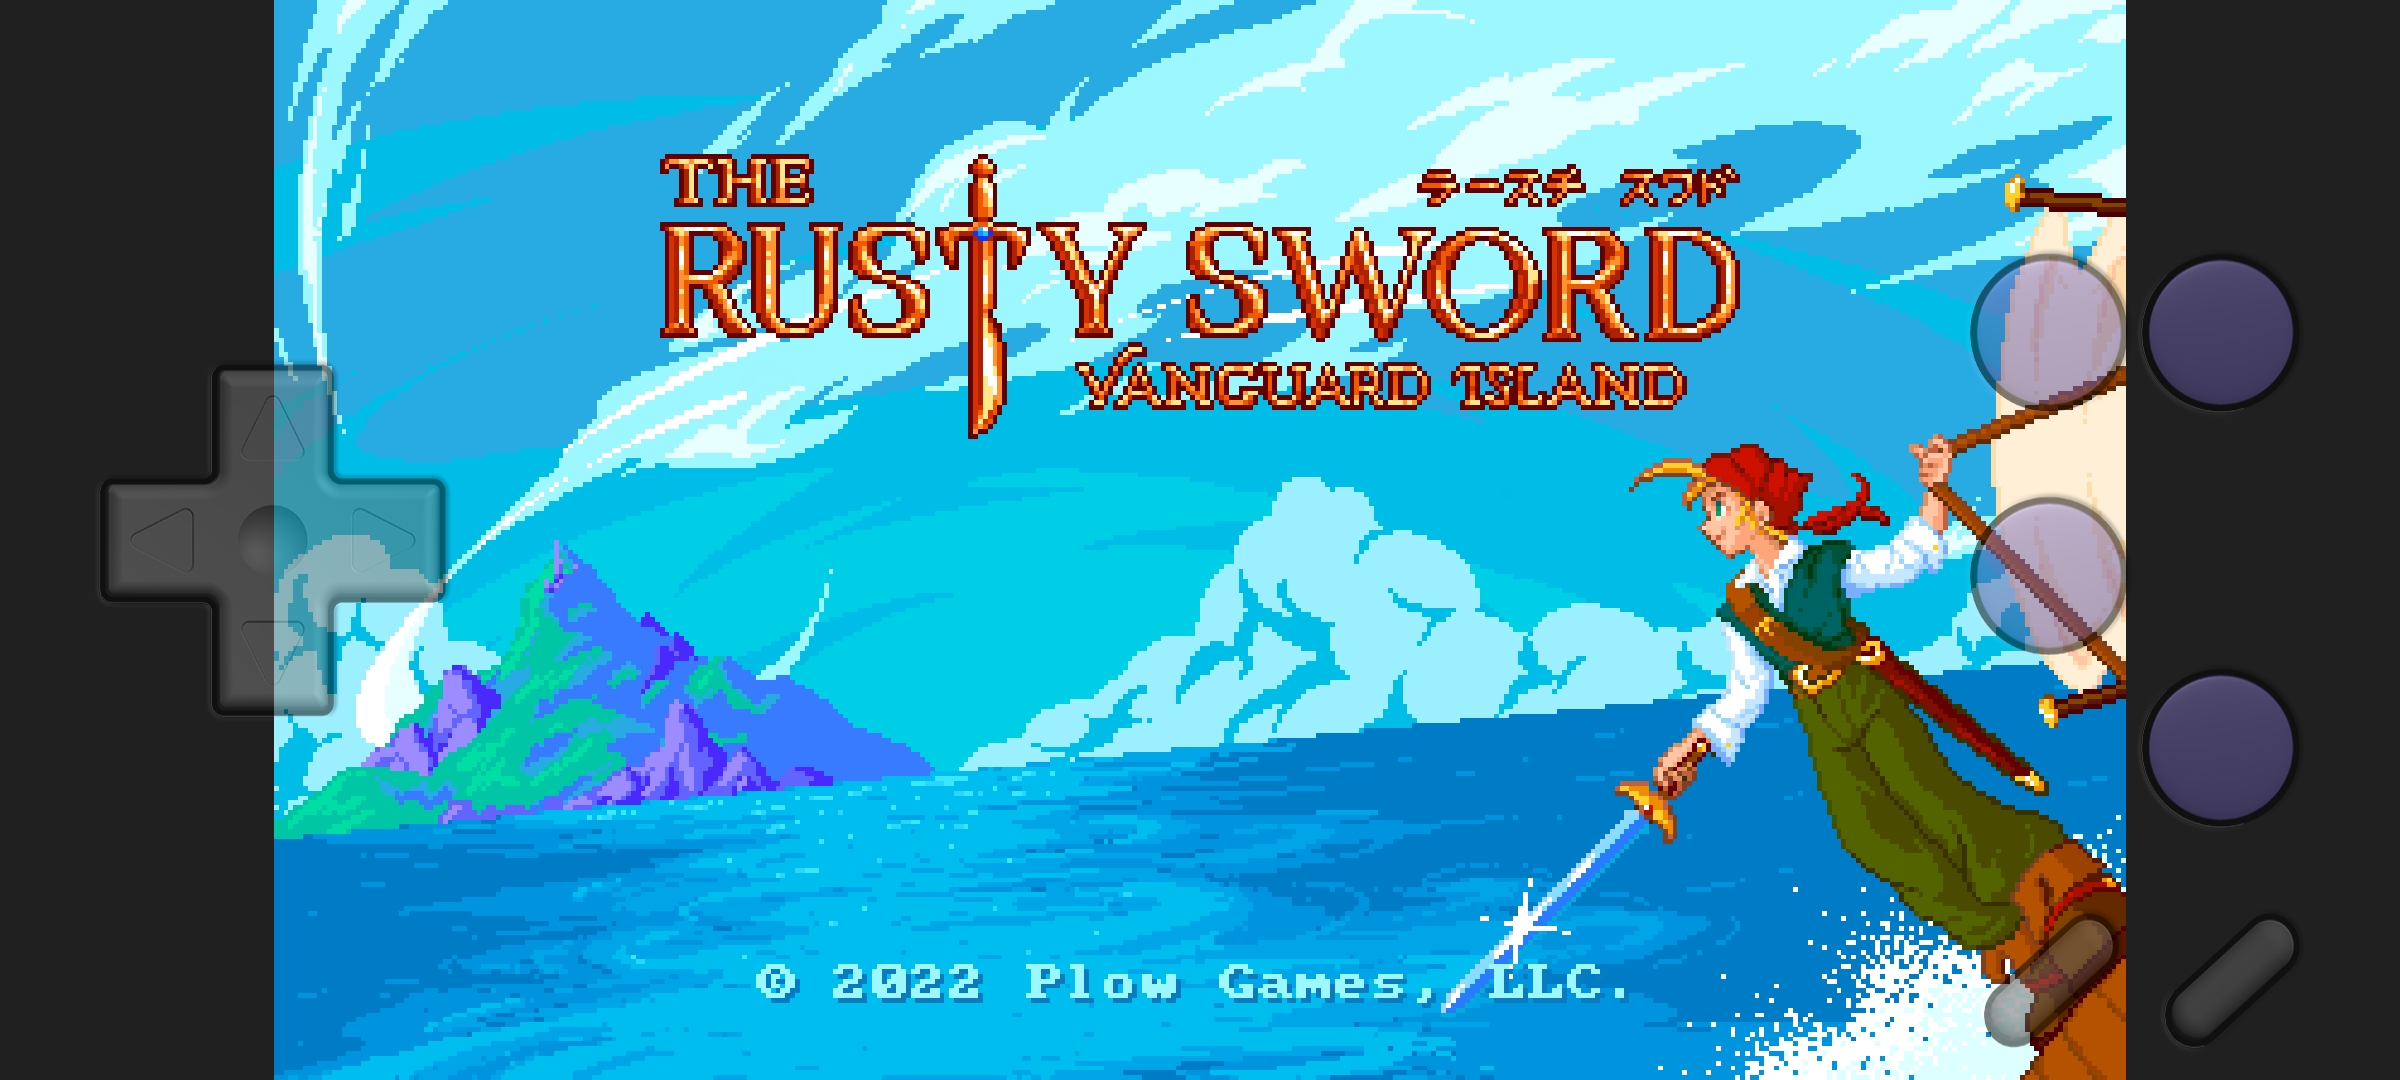 Game Rusty Sword Vanguard Island Offline Co-Op Cho Android